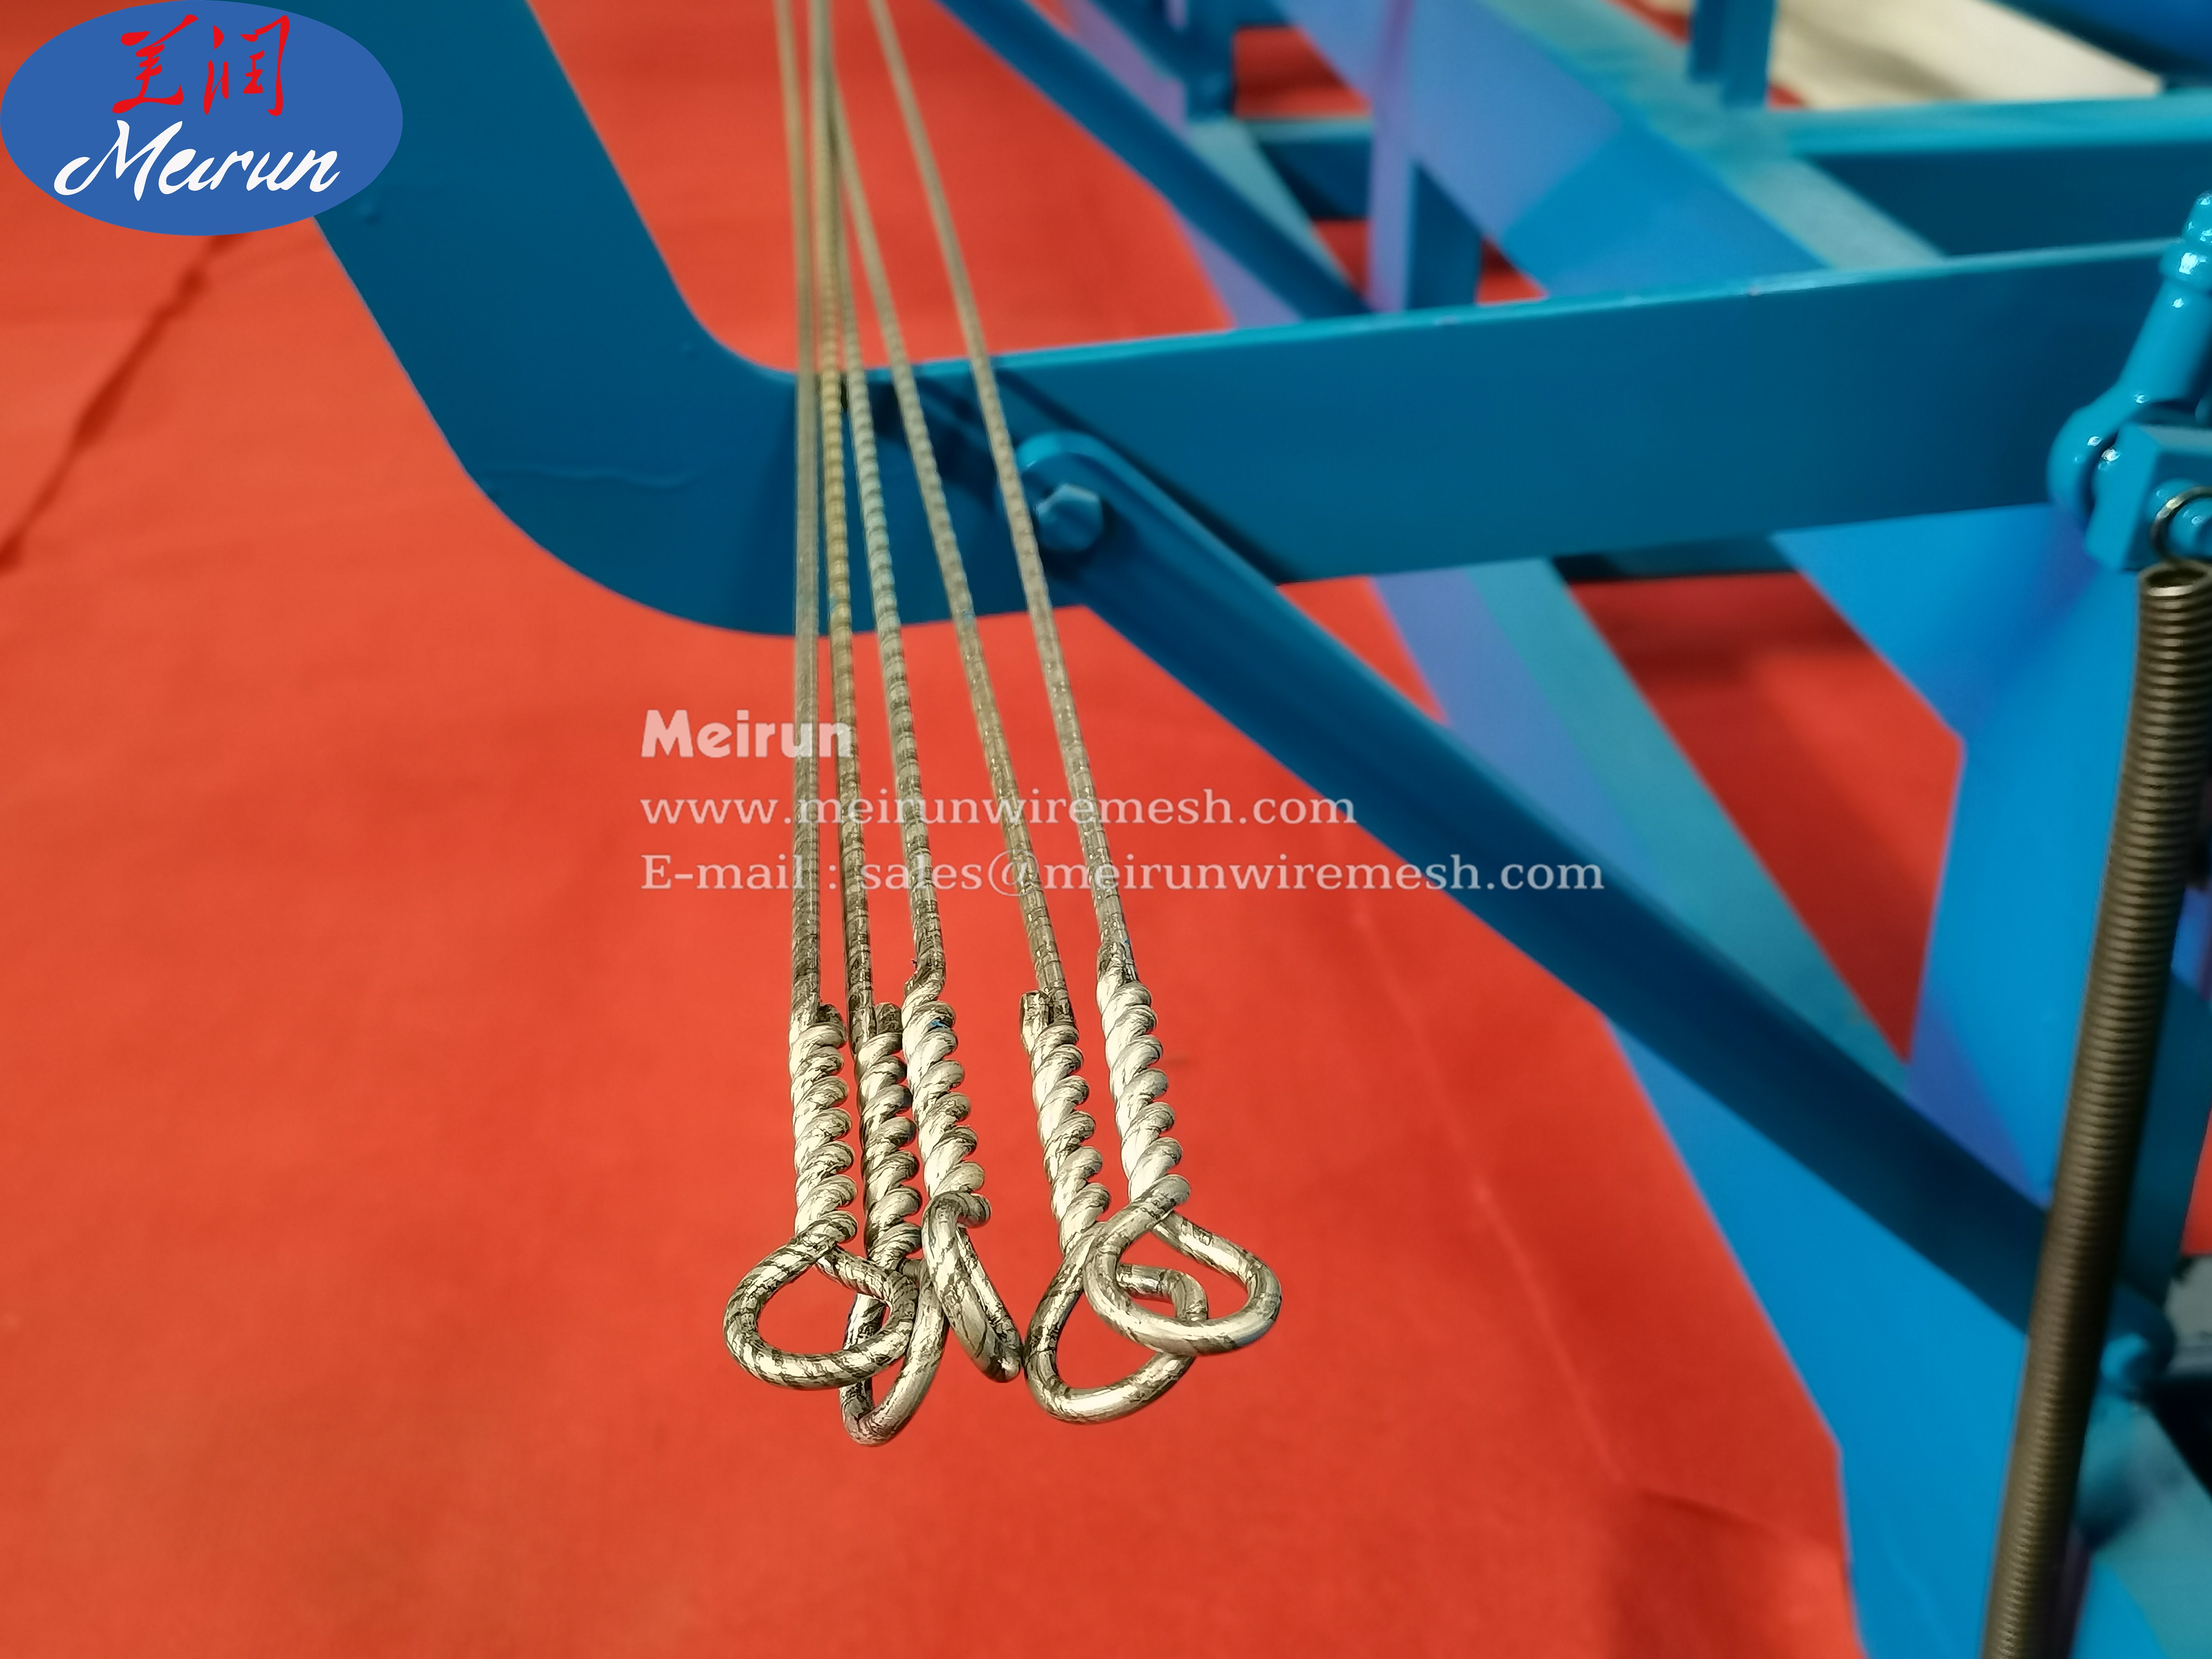  Single Loop Quick Link Galvanized Cotton Baling Wire Double Loop Wire Ties Machine